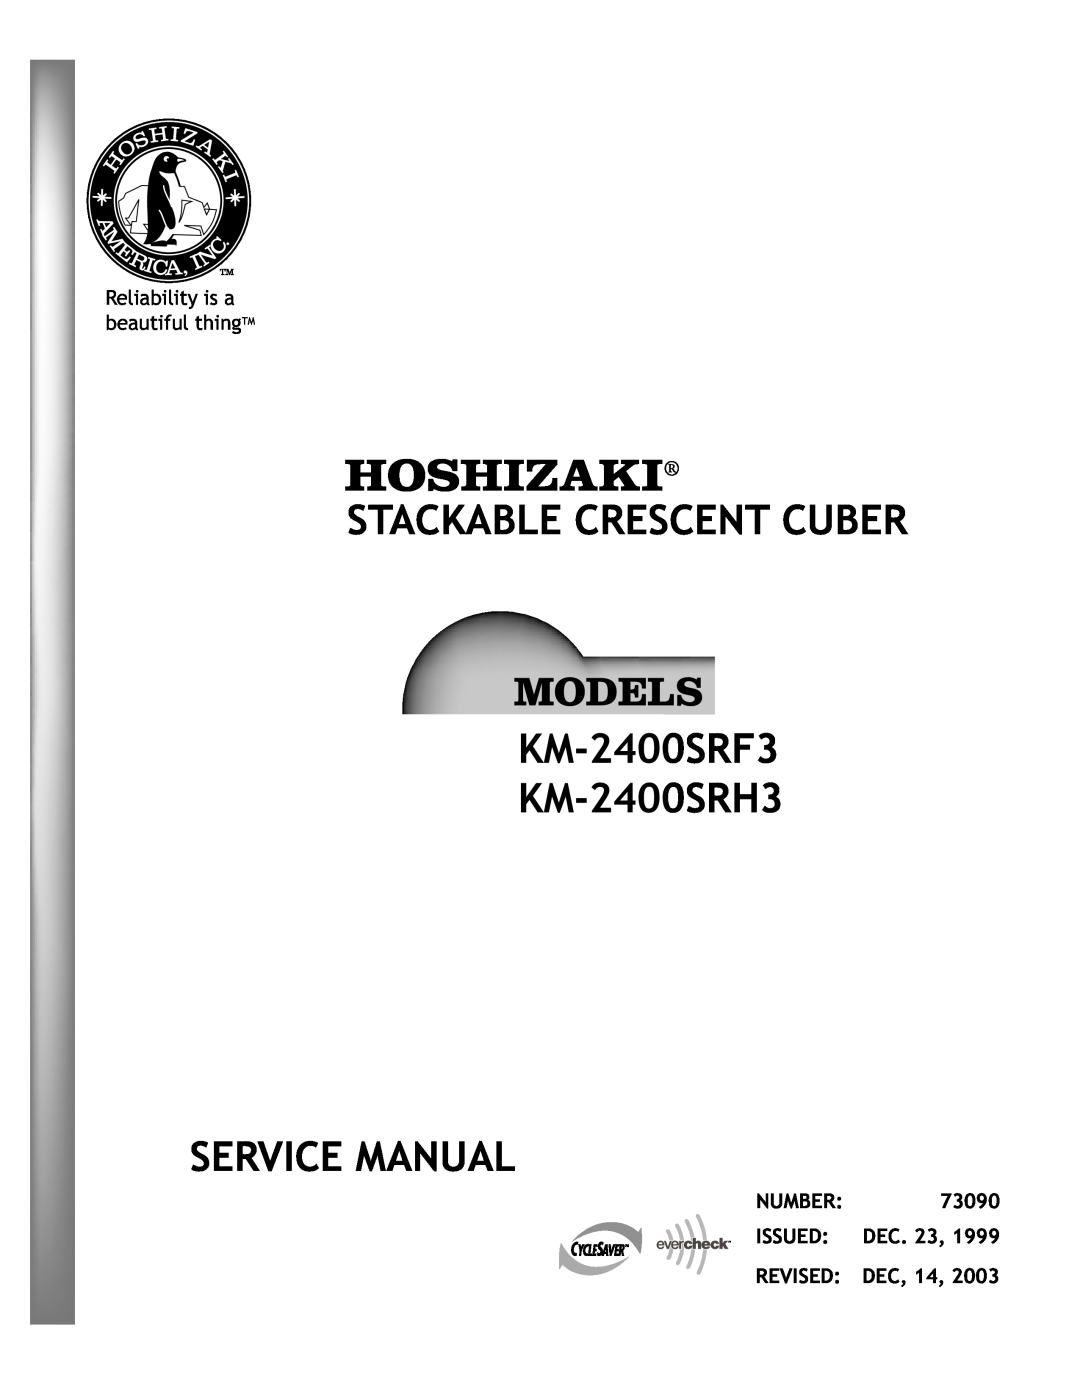 Hoshizaki service manual STACKABLE CRESCENT CUBER KM-2400SRF3 KM-2400SRH3 SERVICE MANUAL 